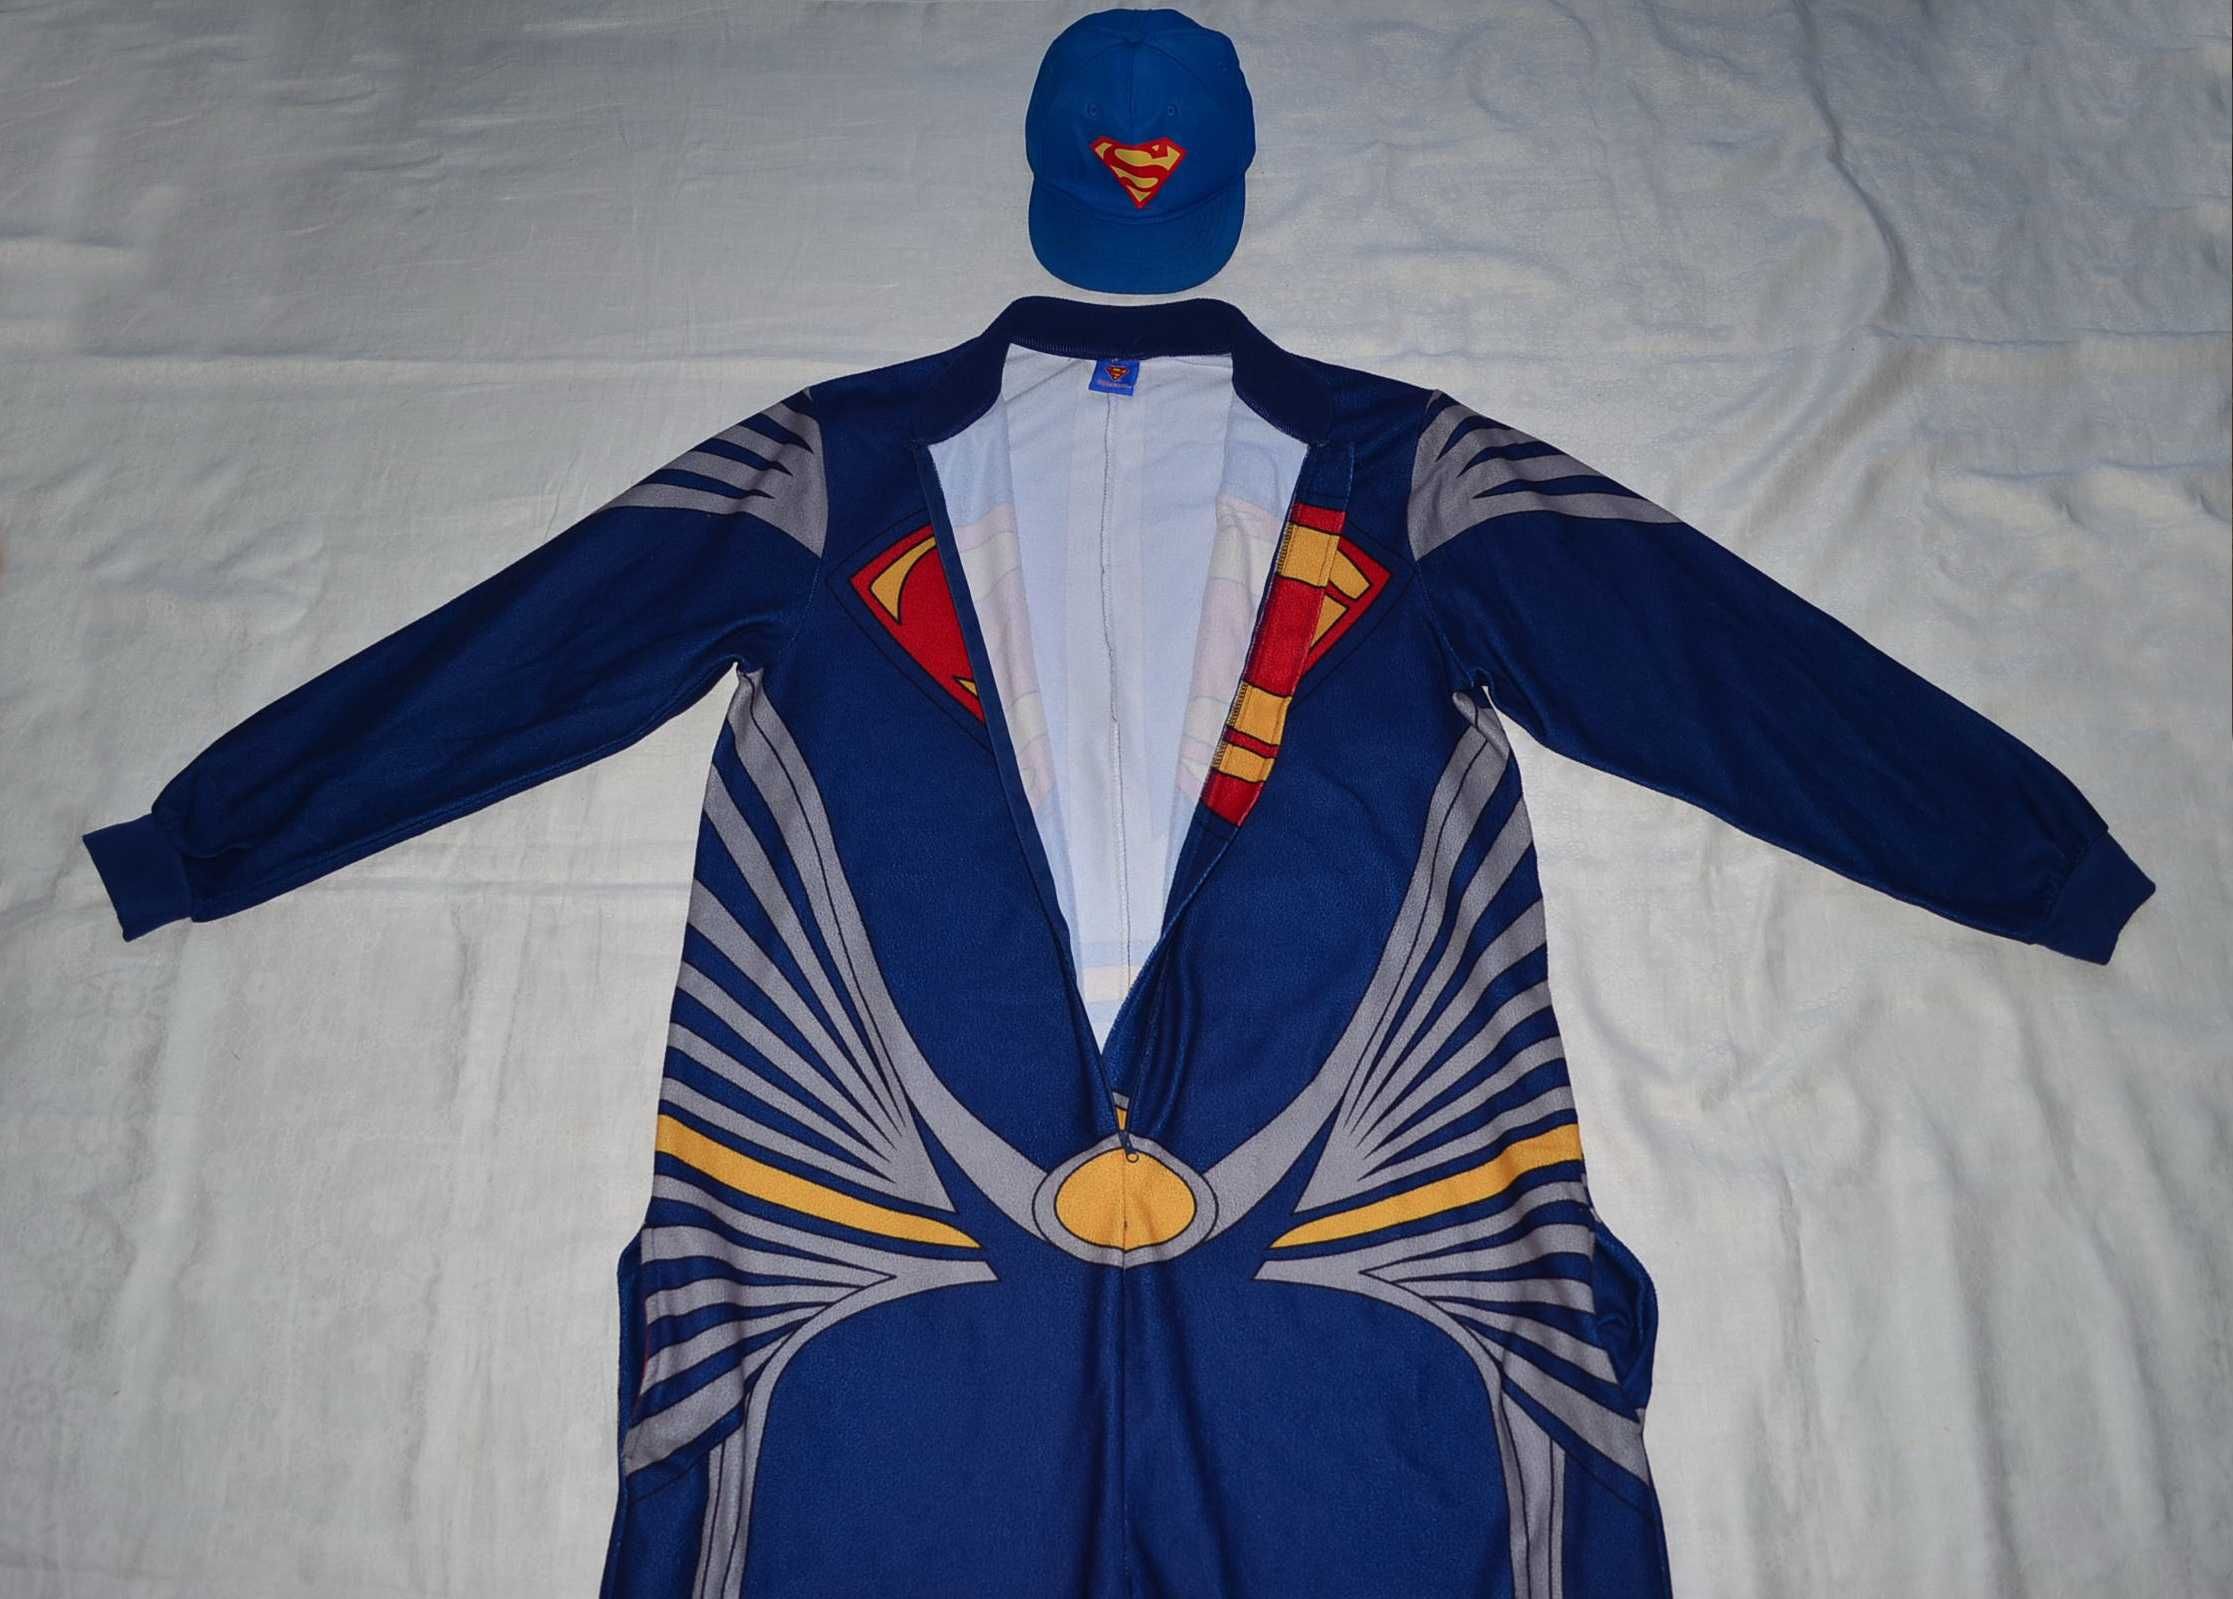 SuperMan костюм большой Супермен Cedar Wood State пижама кигуруми слип